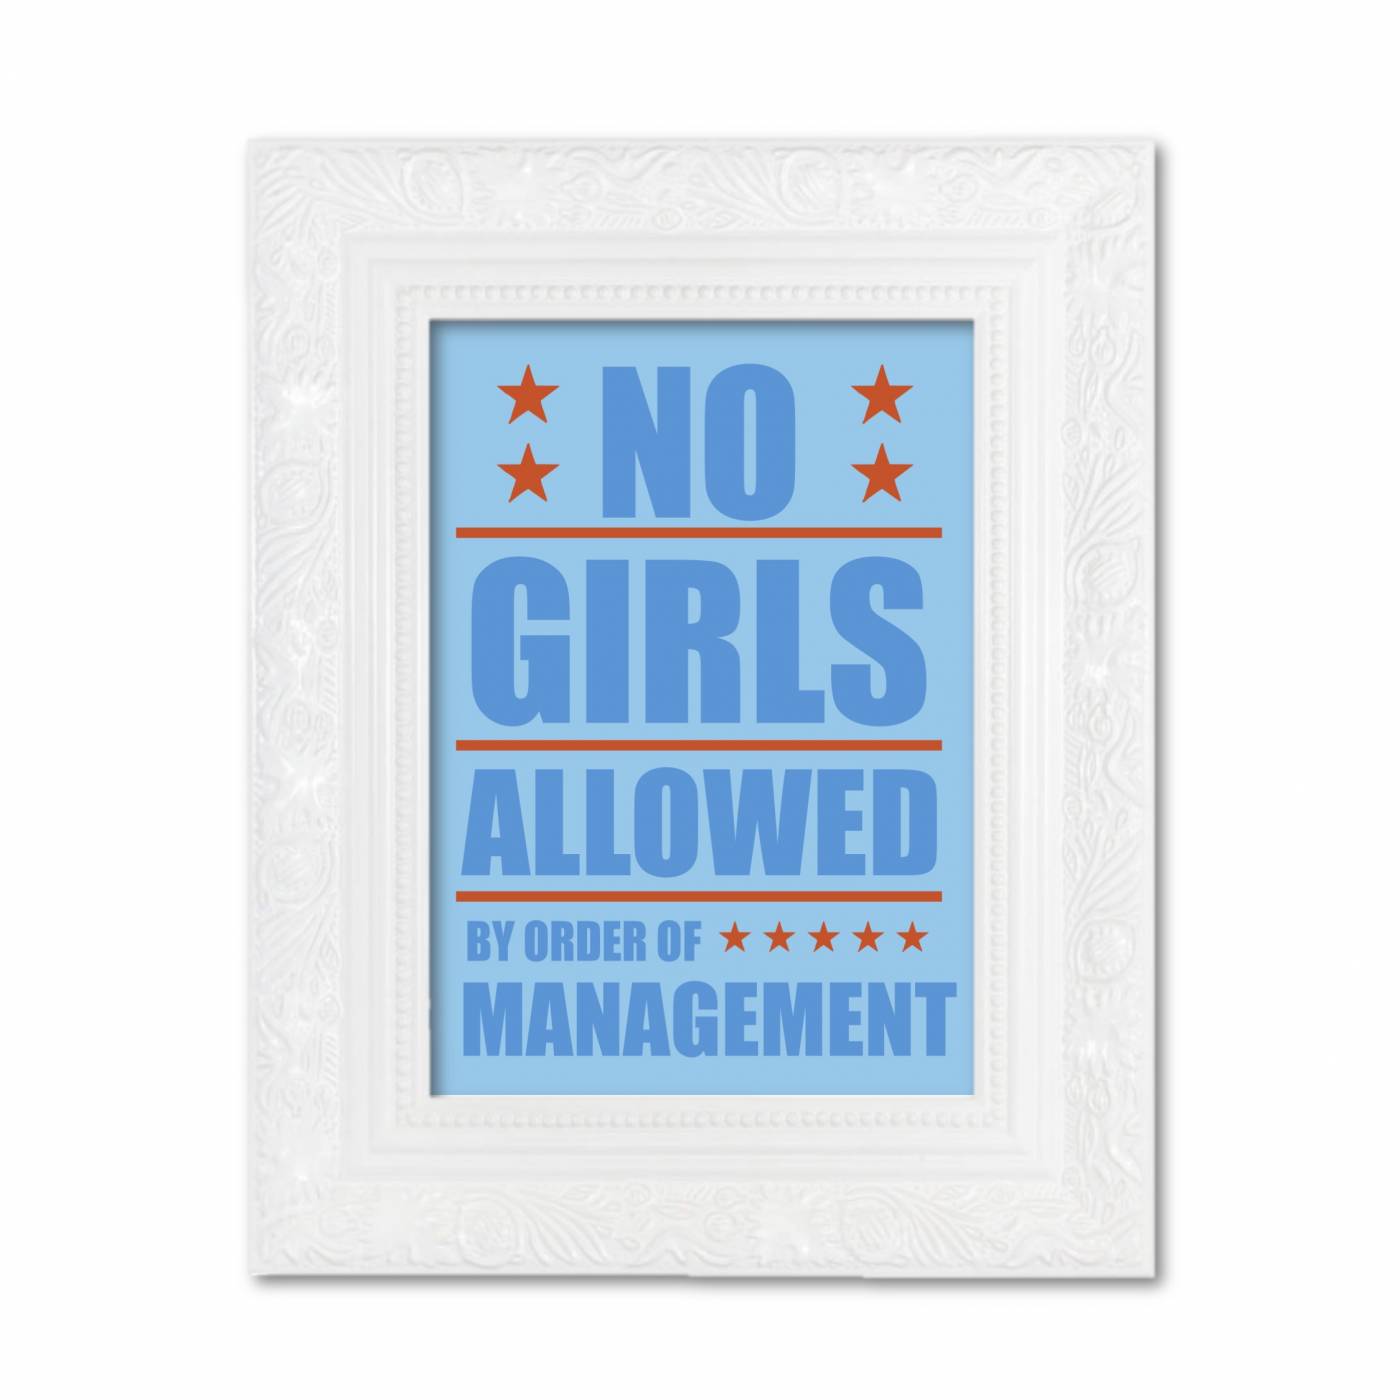 No girls